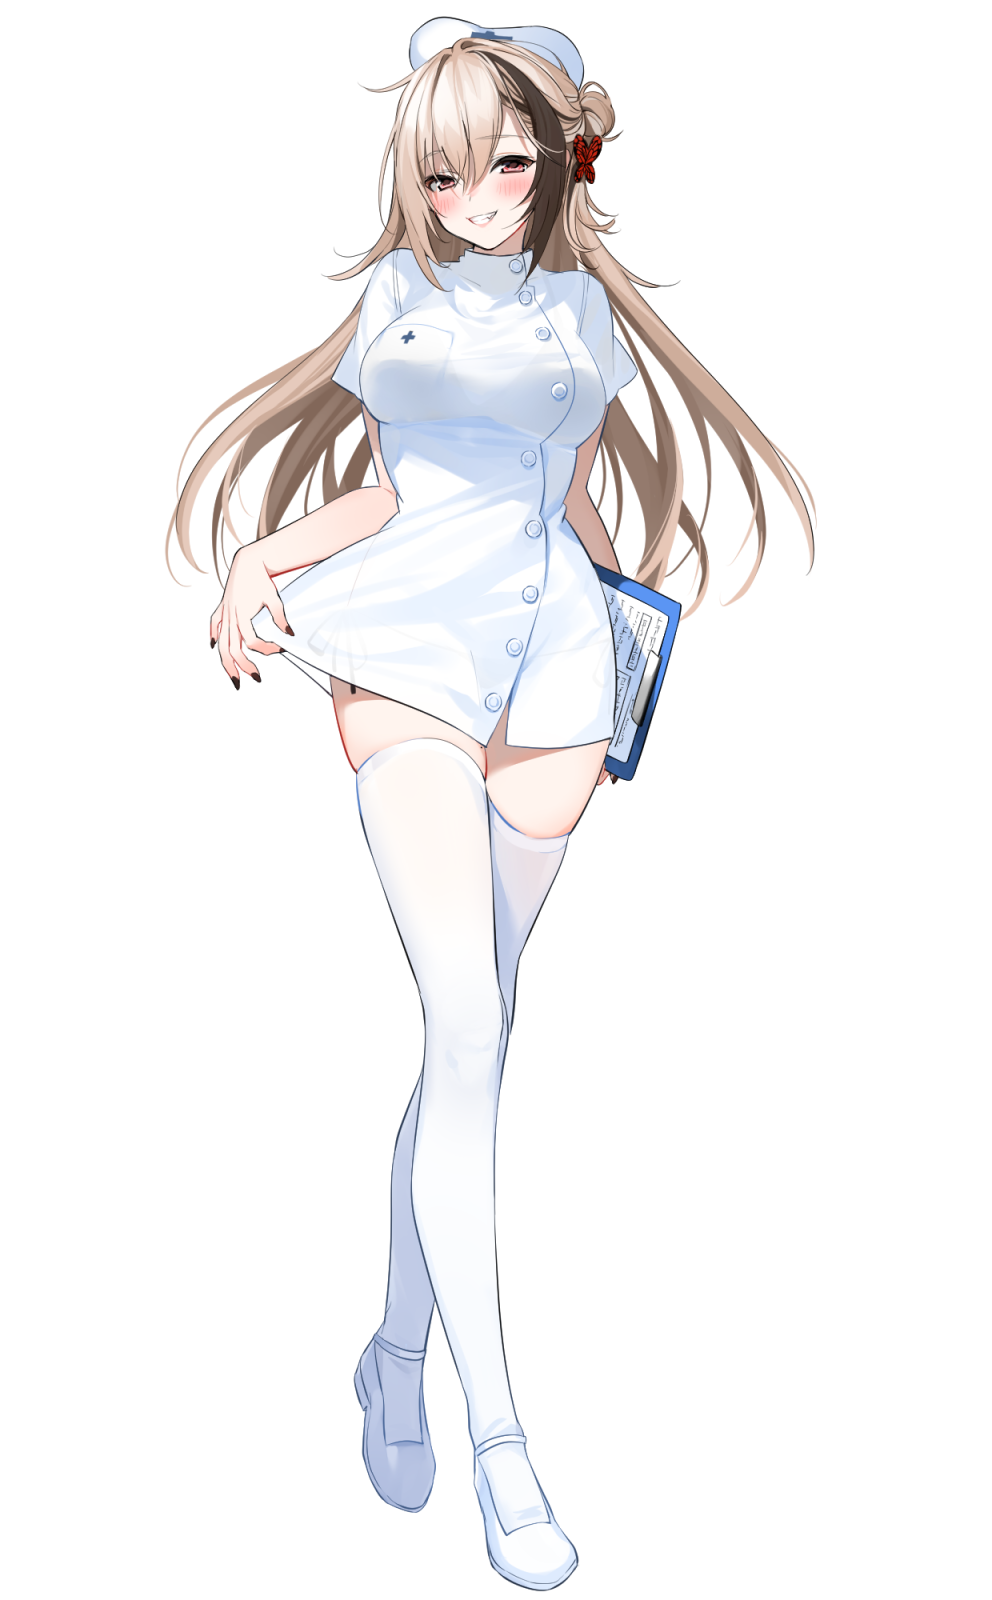 Anime 992x1600 anime anime girls digital art artwork 2D portrait display Xretakex nurses nurse outfit thigh-highs blushing smiling red eyes brunette long hair